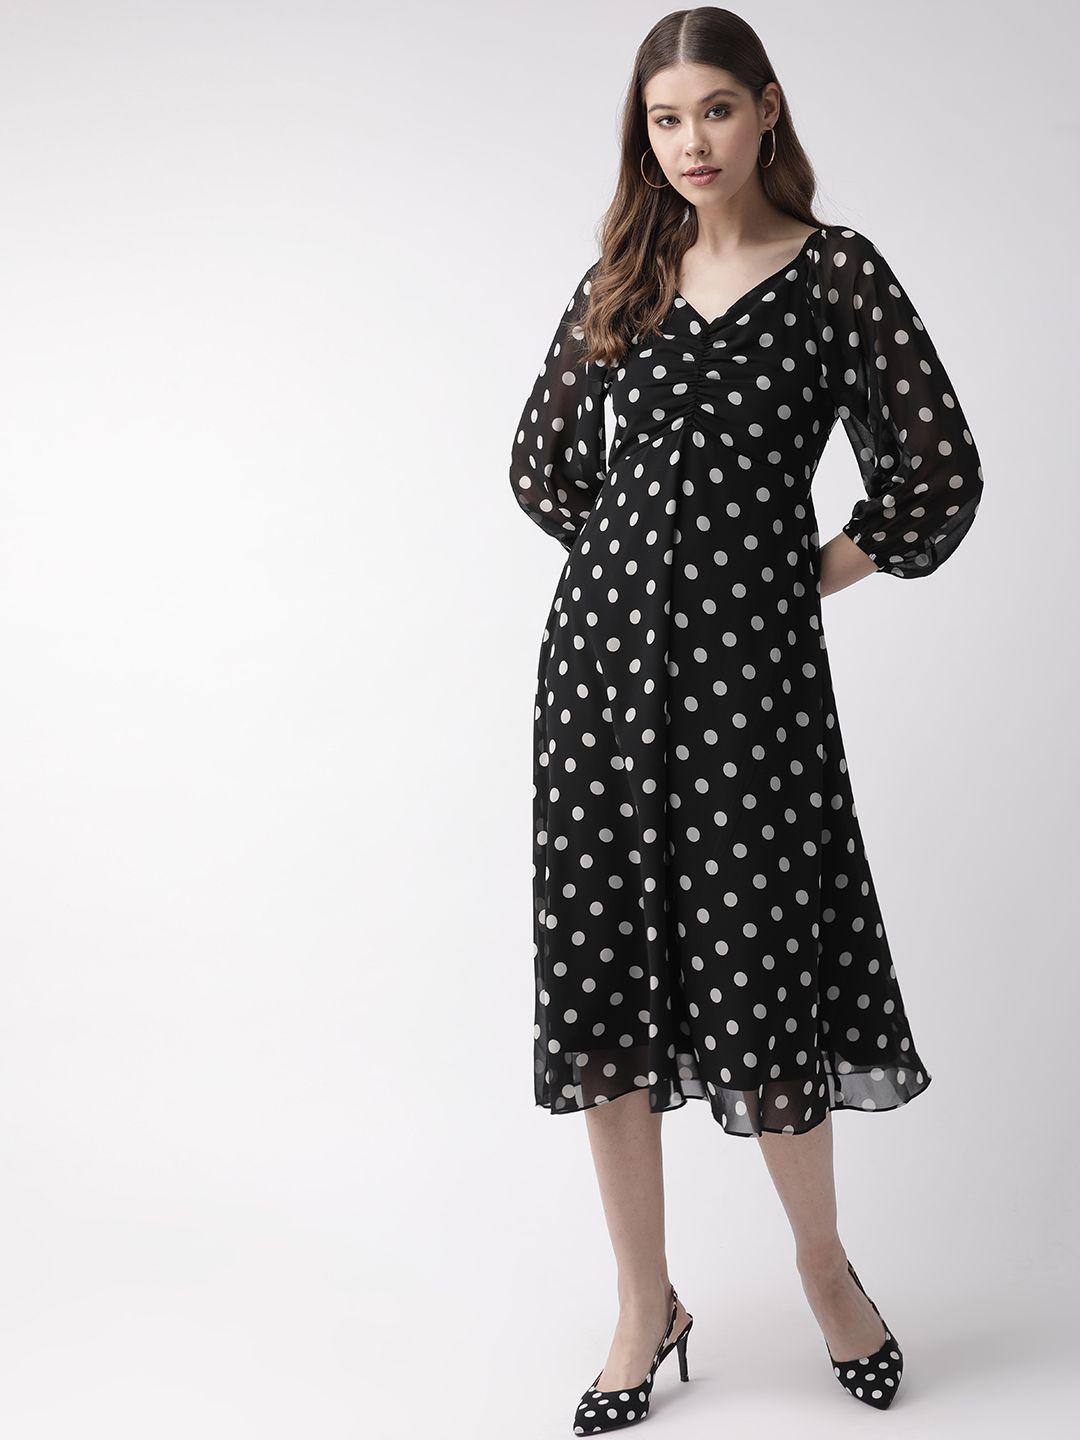 20dresses women black & white polka print a-line dress